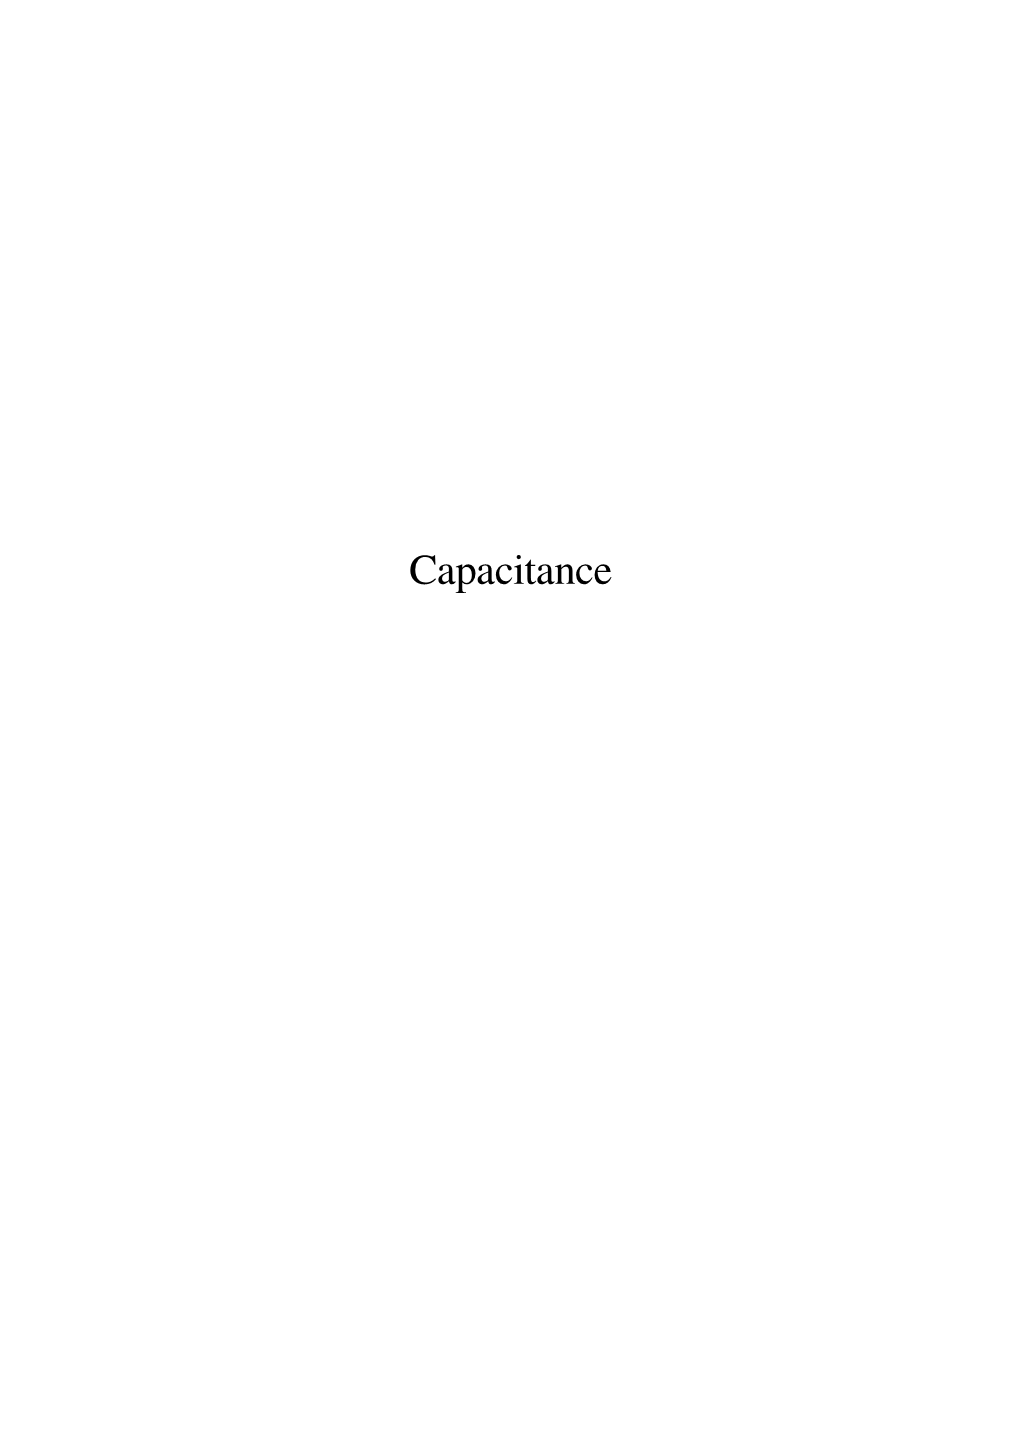 Capacitance Contents